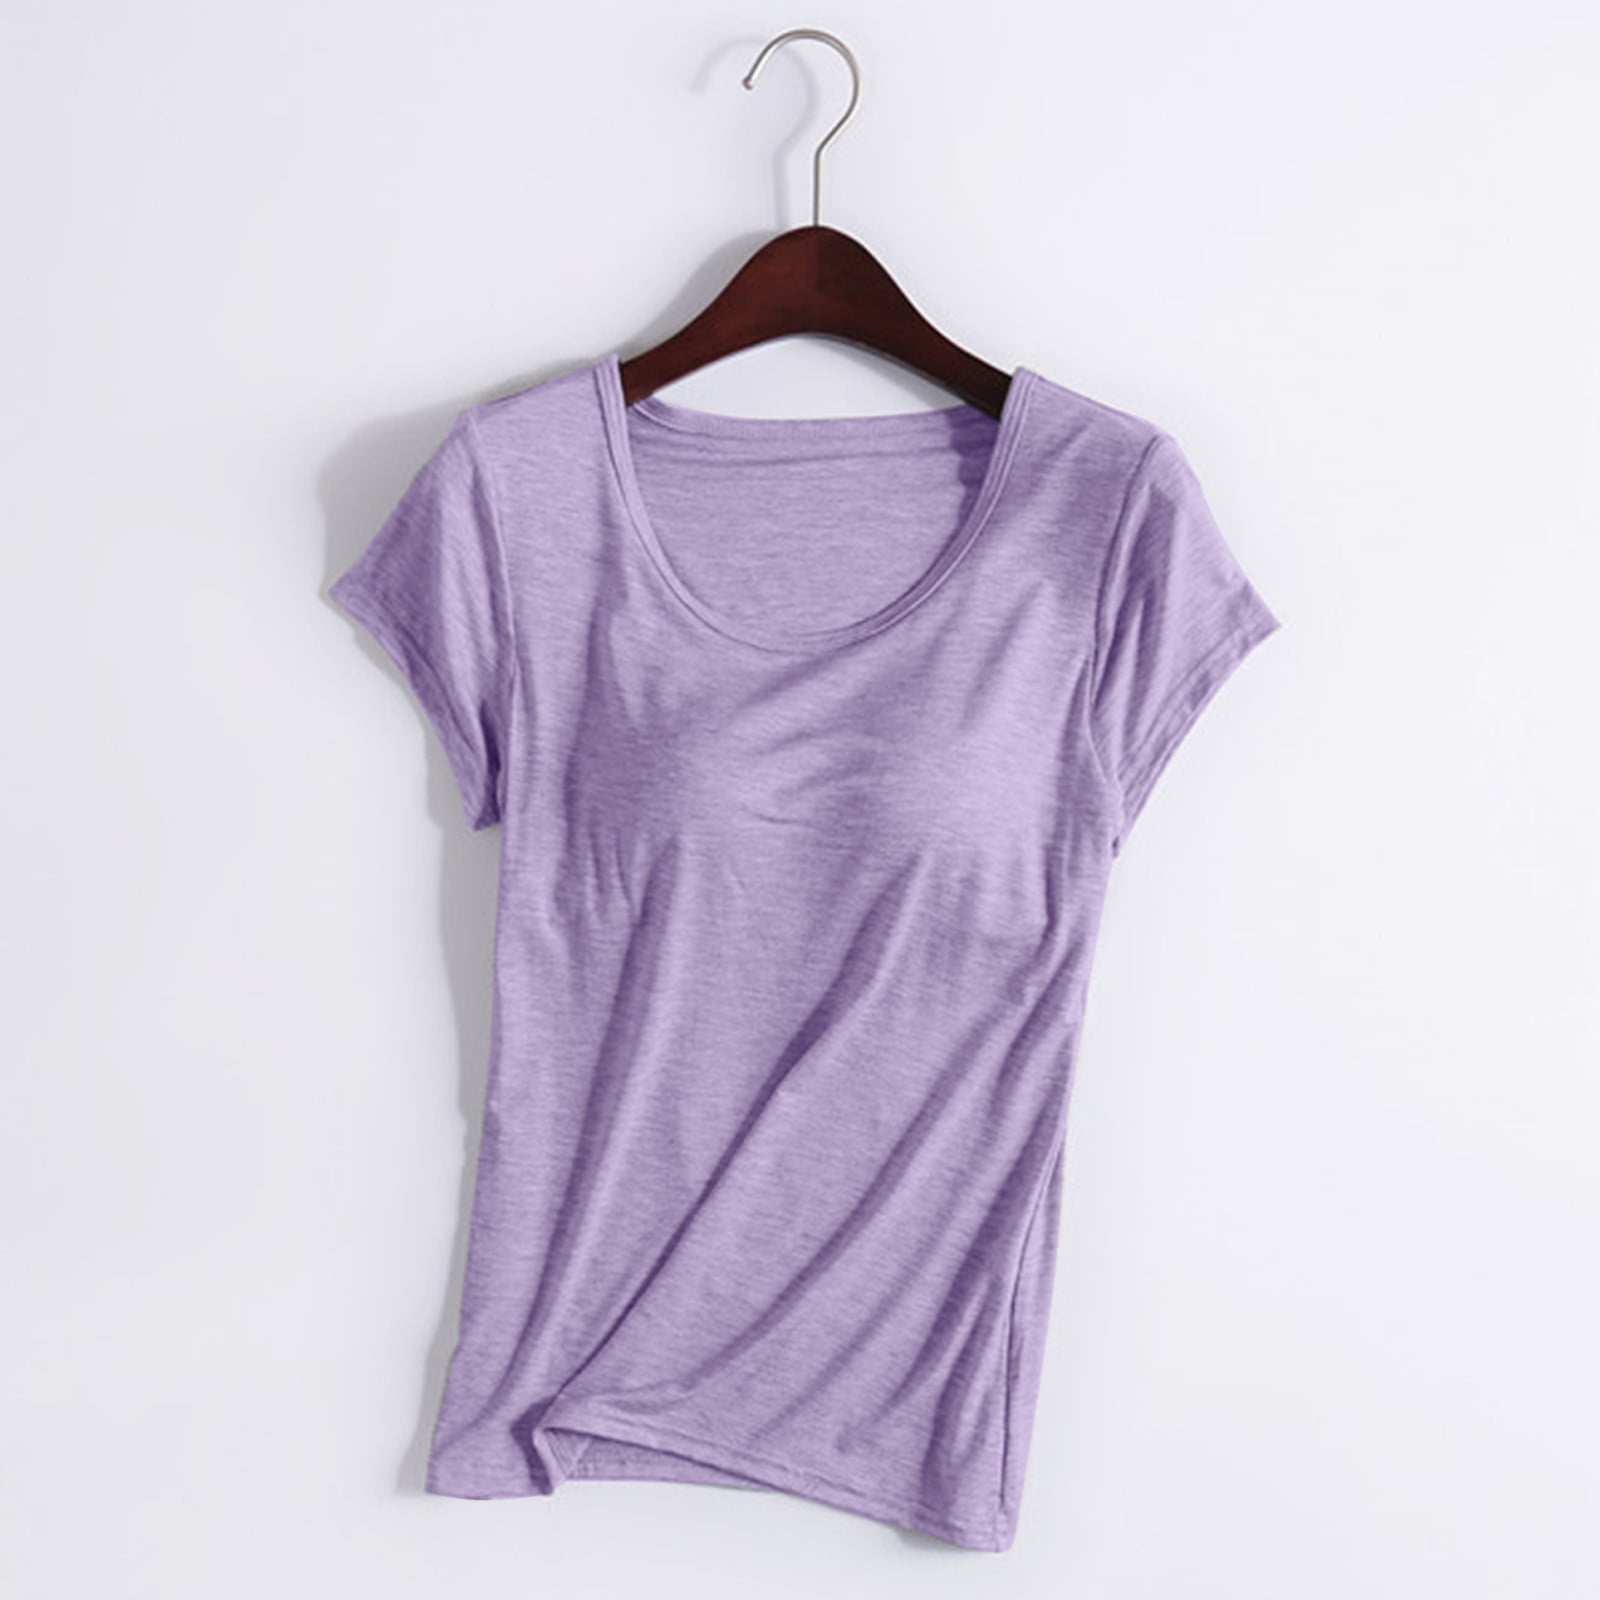 Charella Women \'s Modal Shirt Padded Tee T Top Bra Purple,XXXL Casual Pajama Top Yoga Short Sleeve